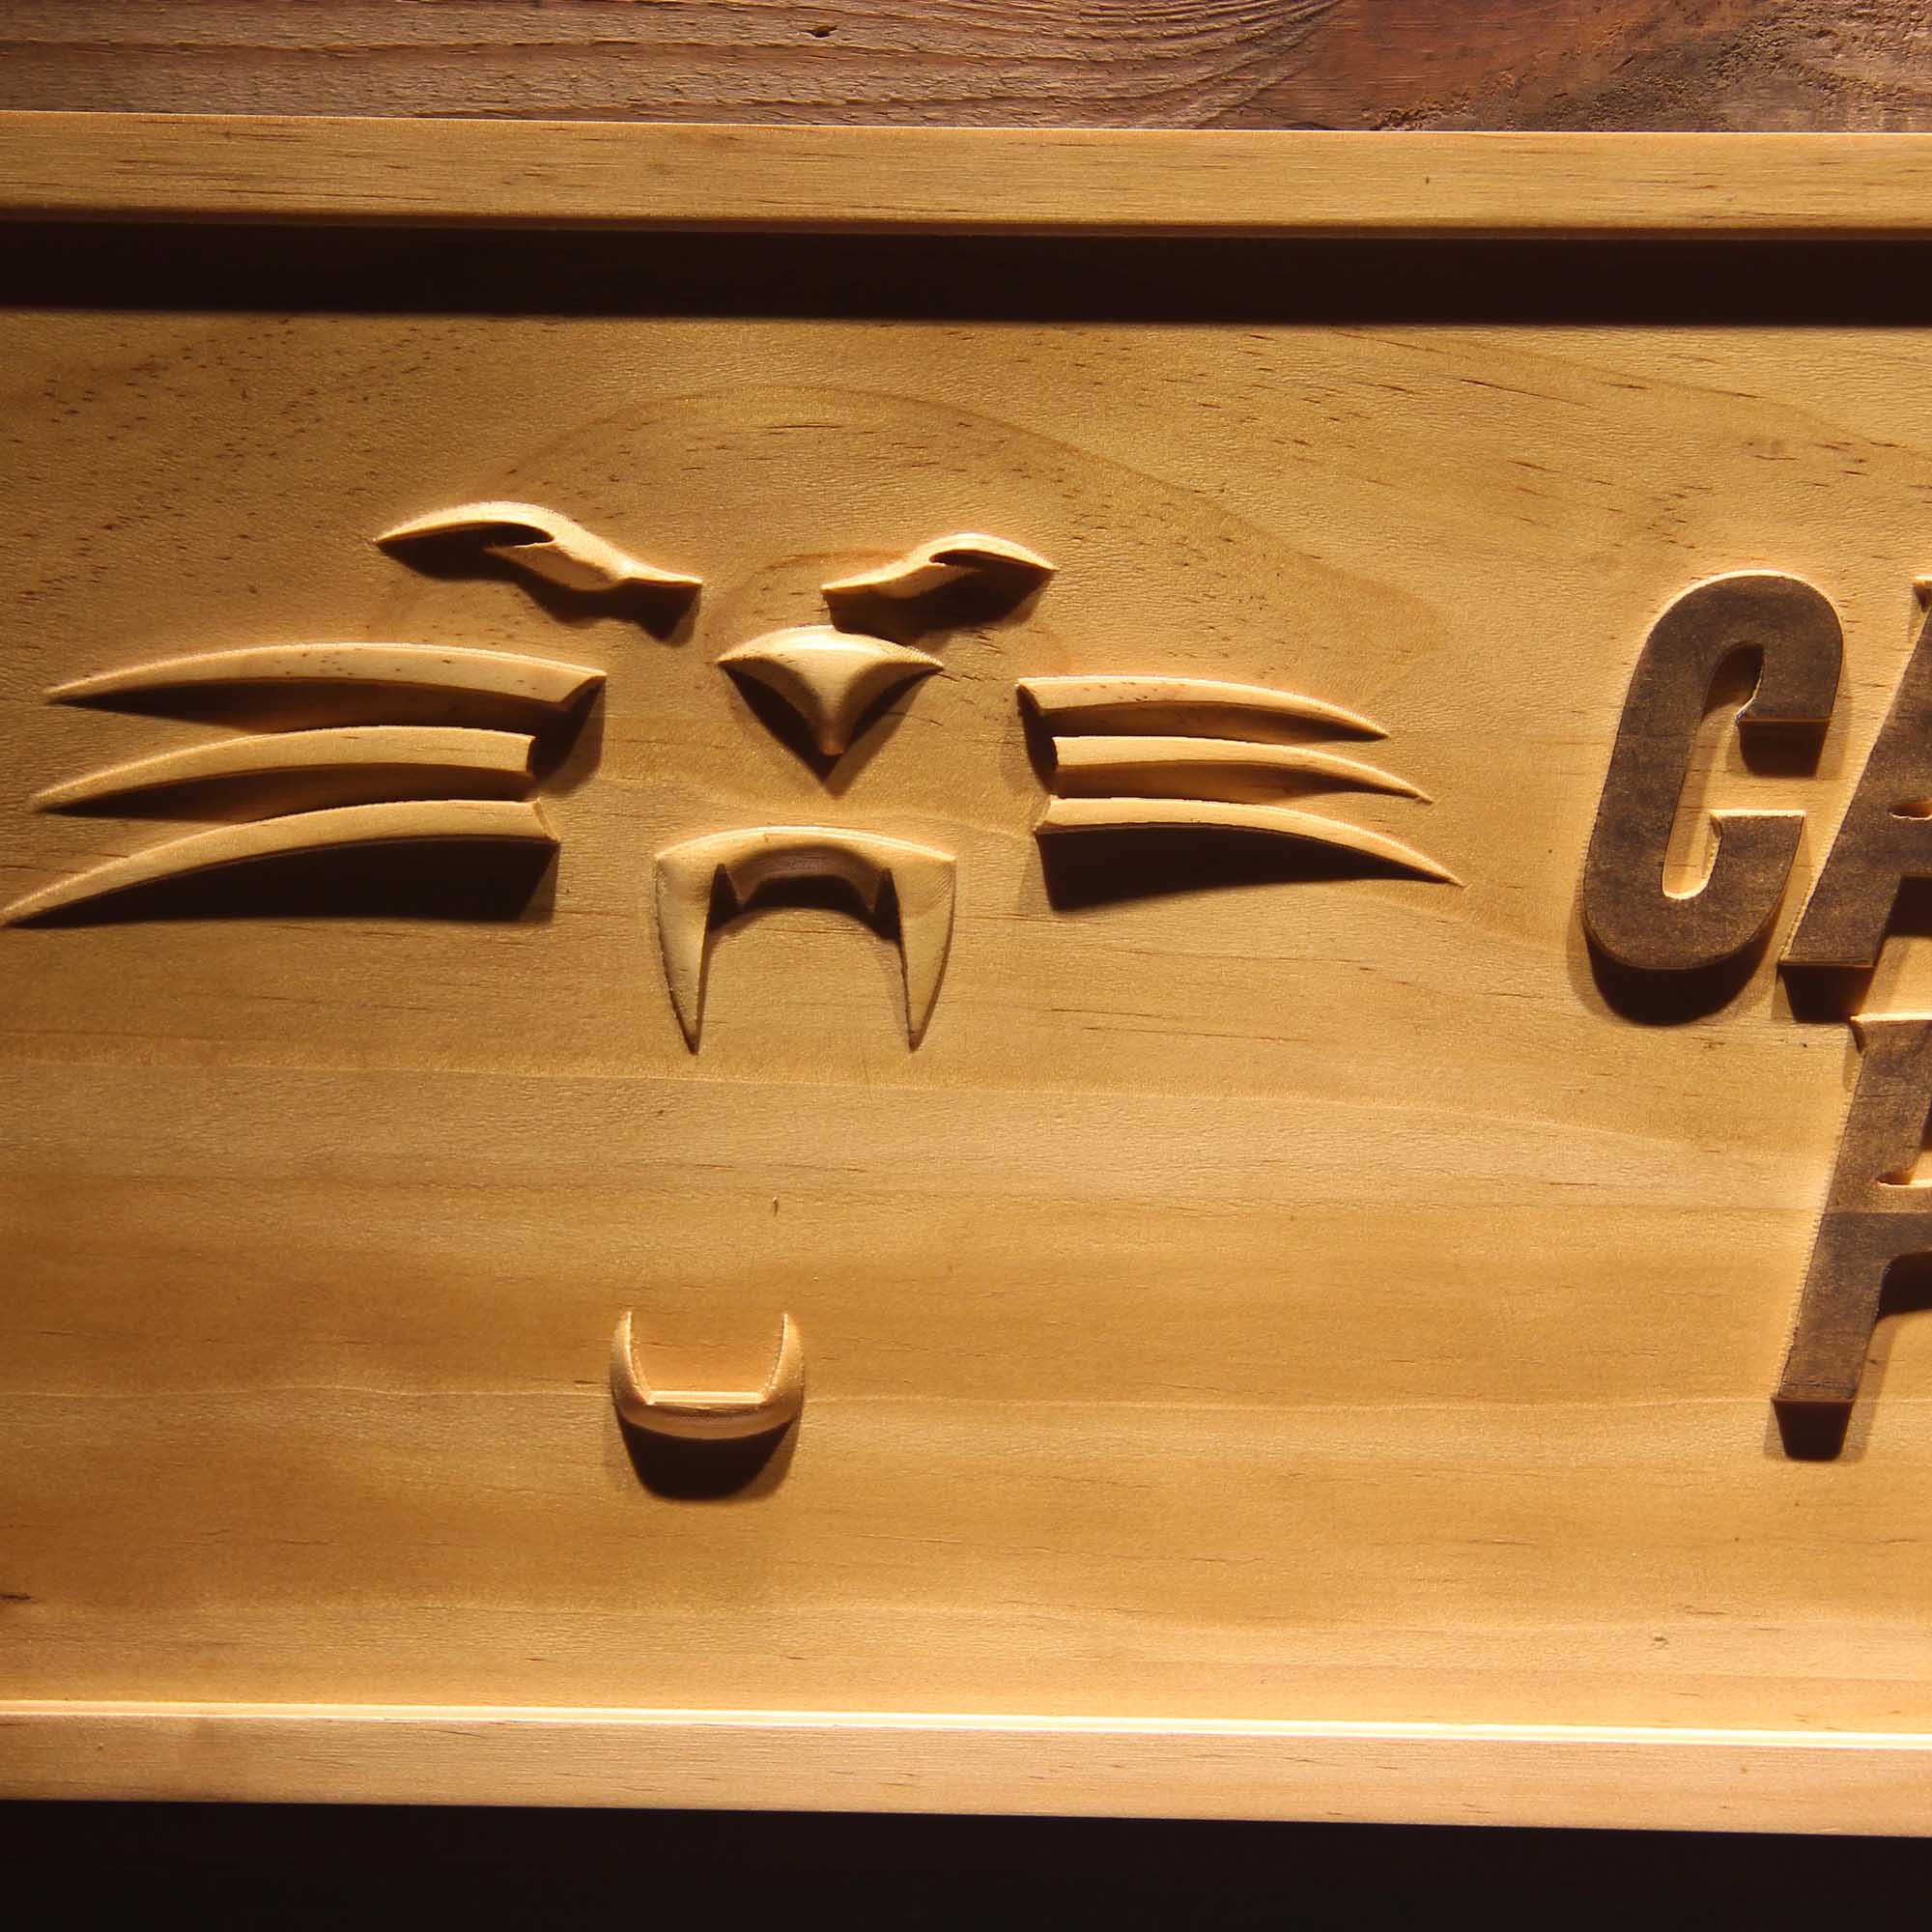 Carolina Panthers Panther,nfl 3D Solid Wooden Craving Sign